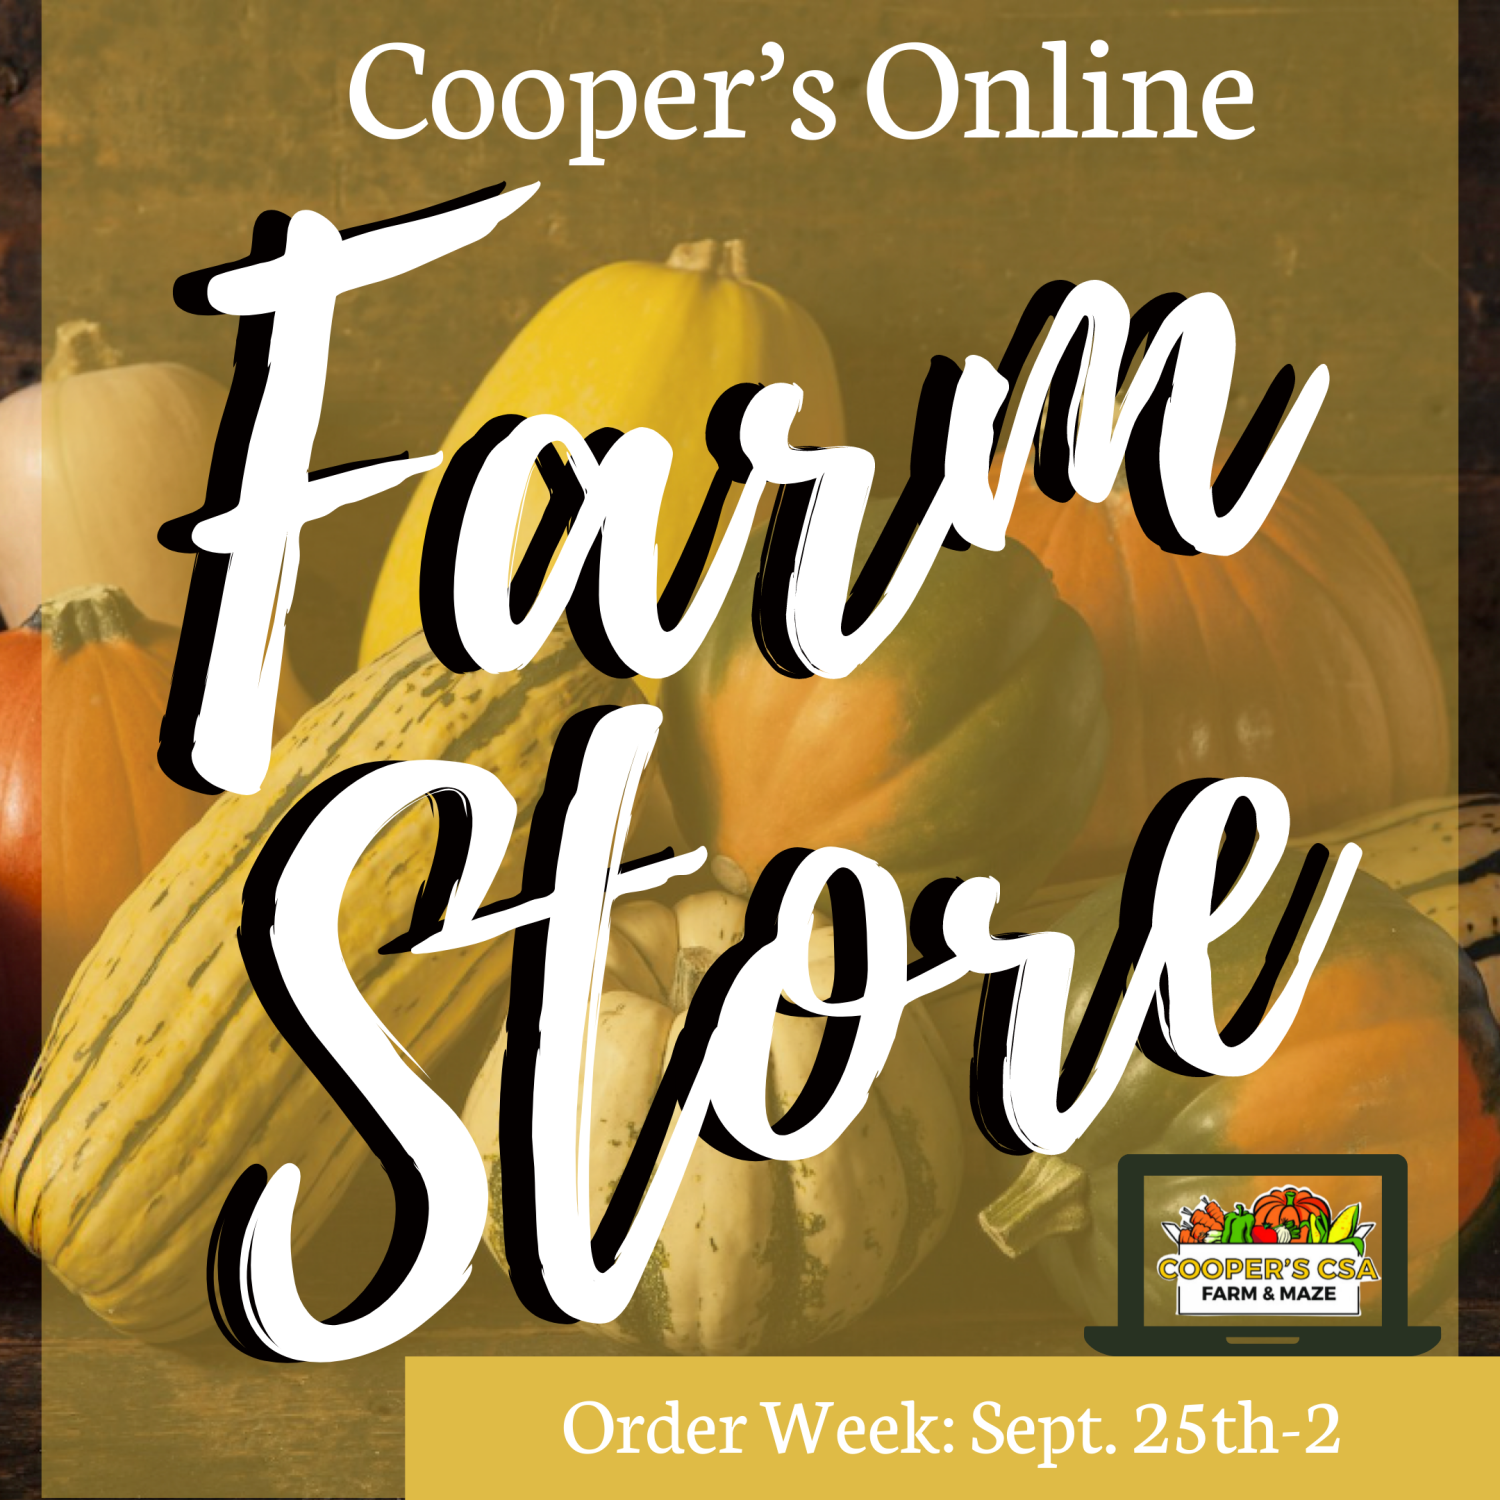 Coopers CSA Online FarmStore- Order week Sept. 25-28th